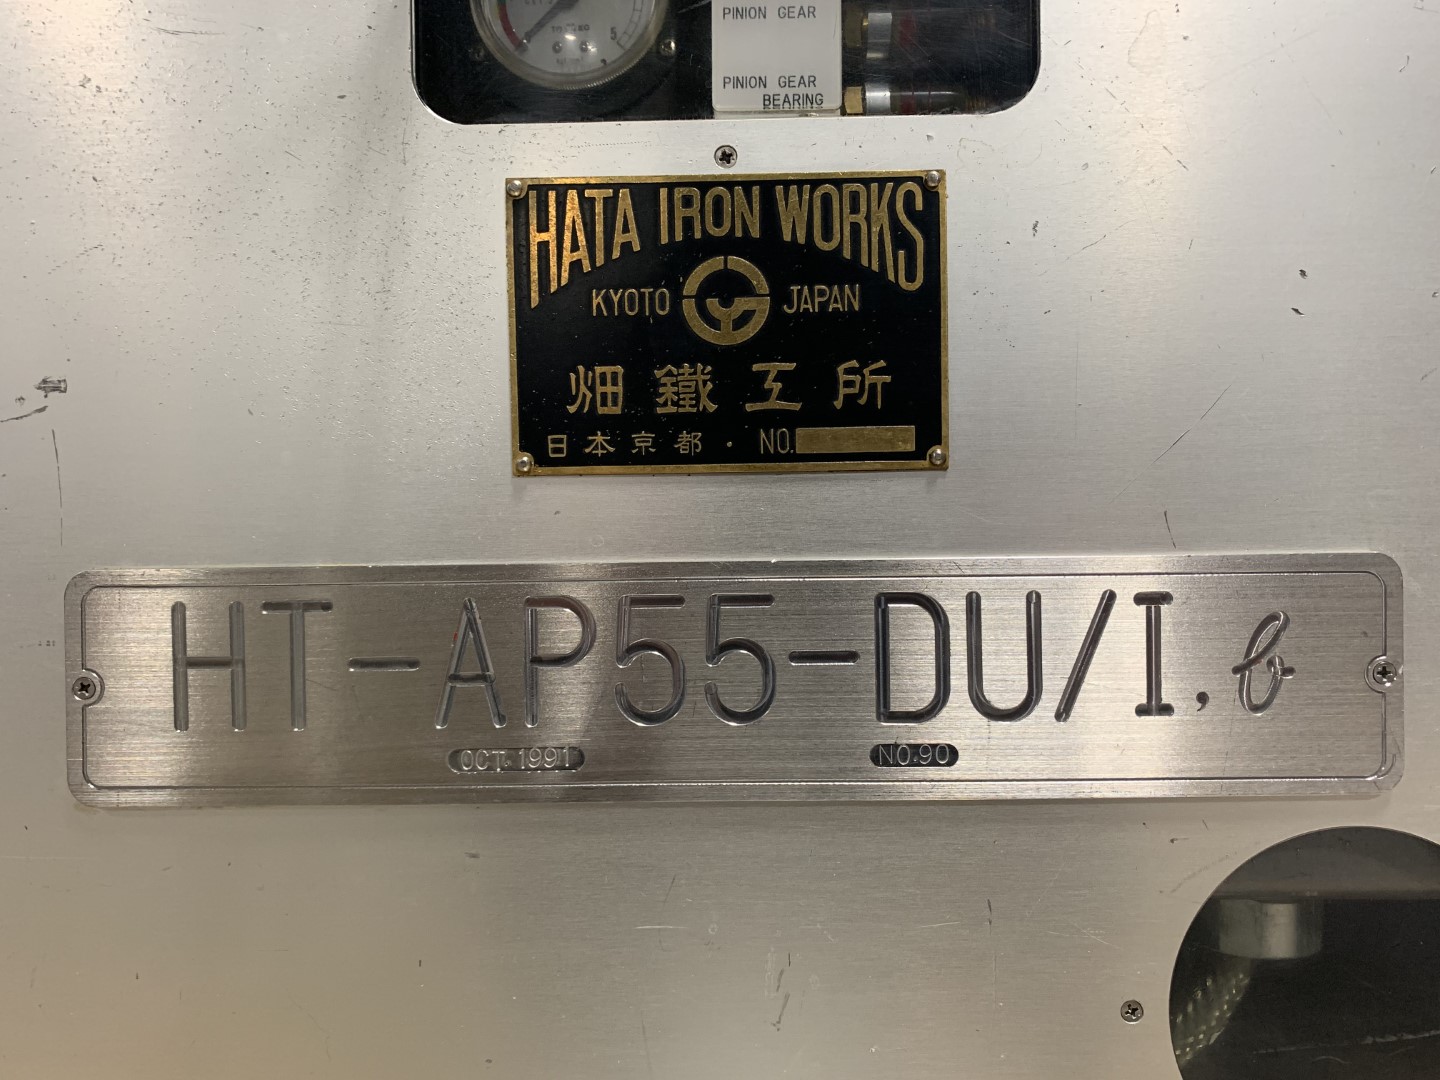 Hata Tablet Press, Model HT-AP55-DU/I.E